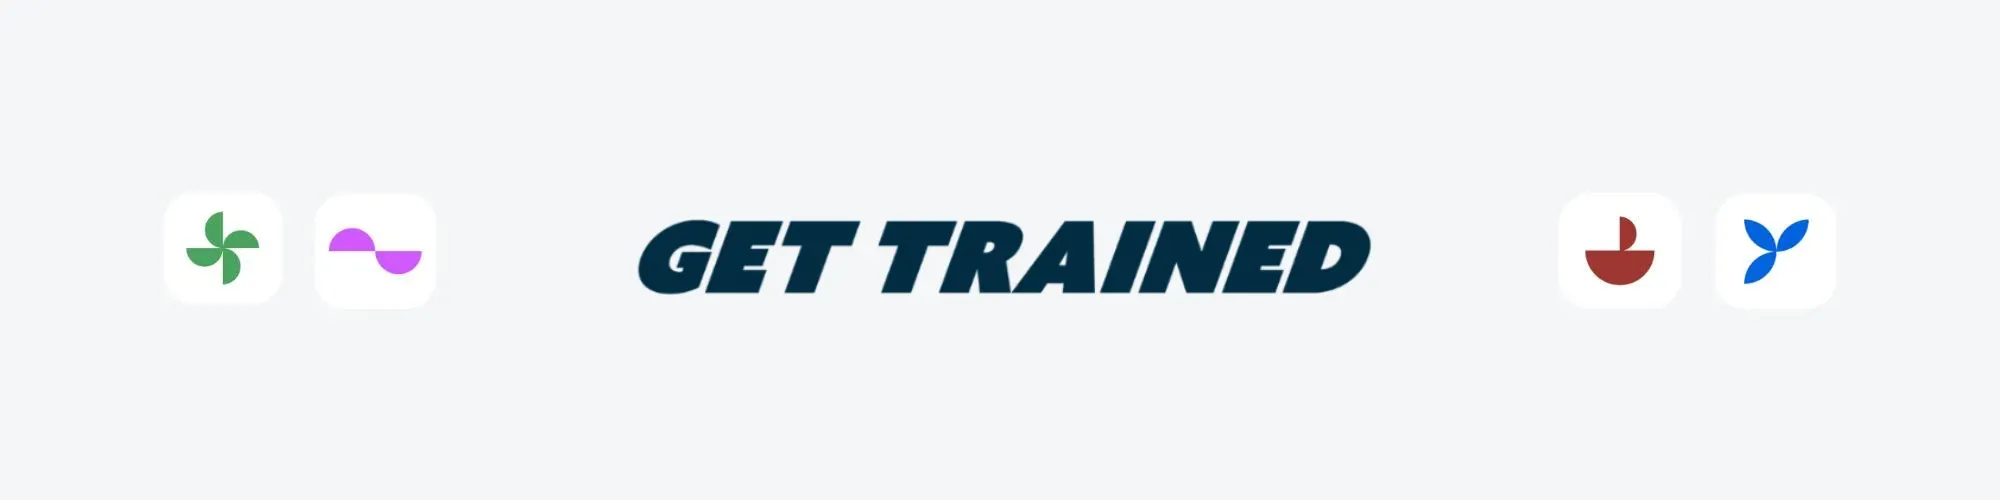 get trained – header